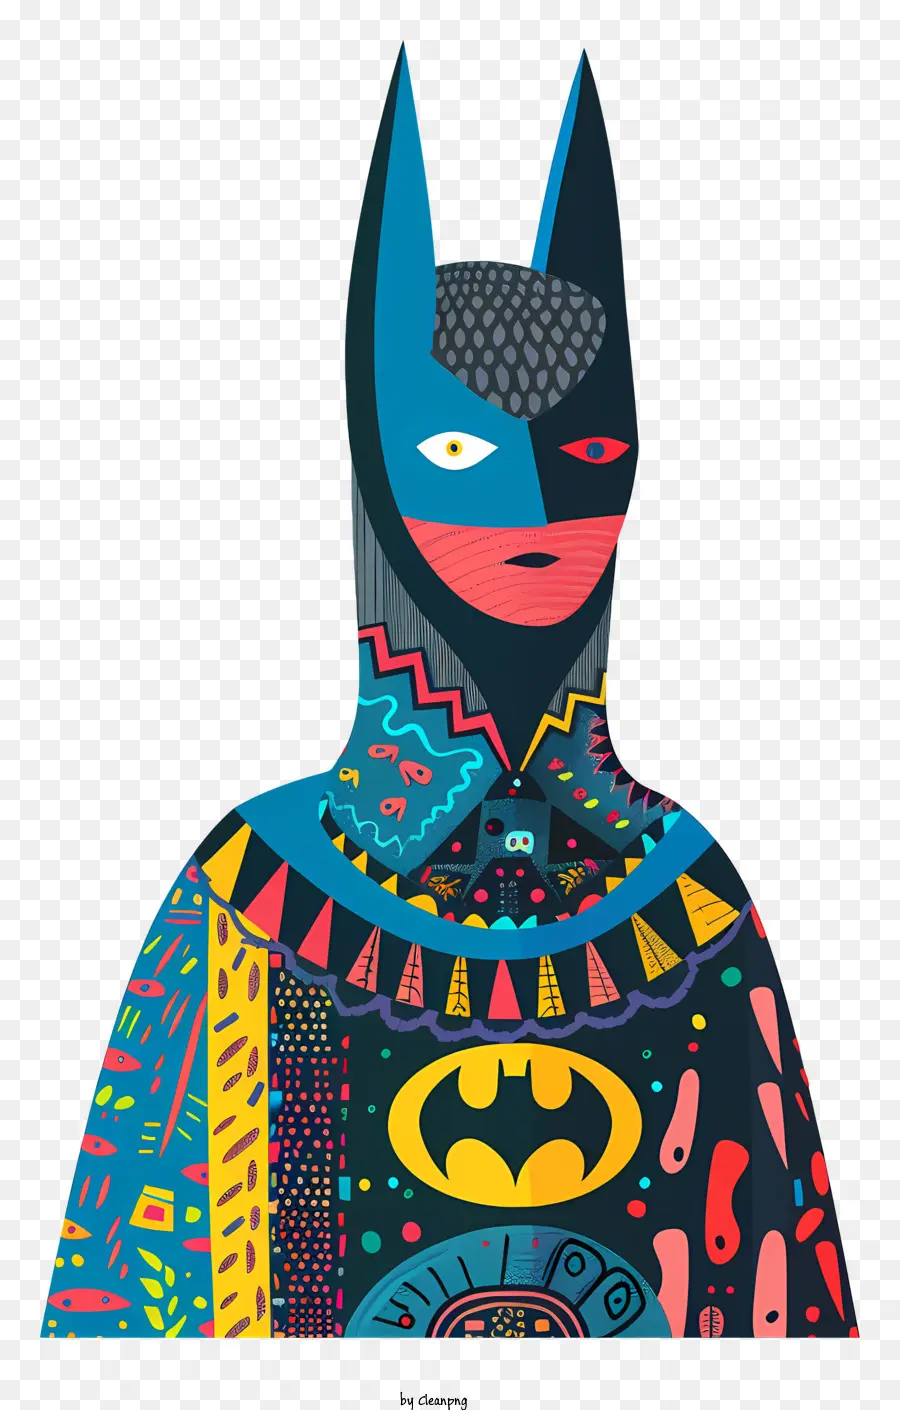 Batman - Donna in costume Batman con motivi geometrici